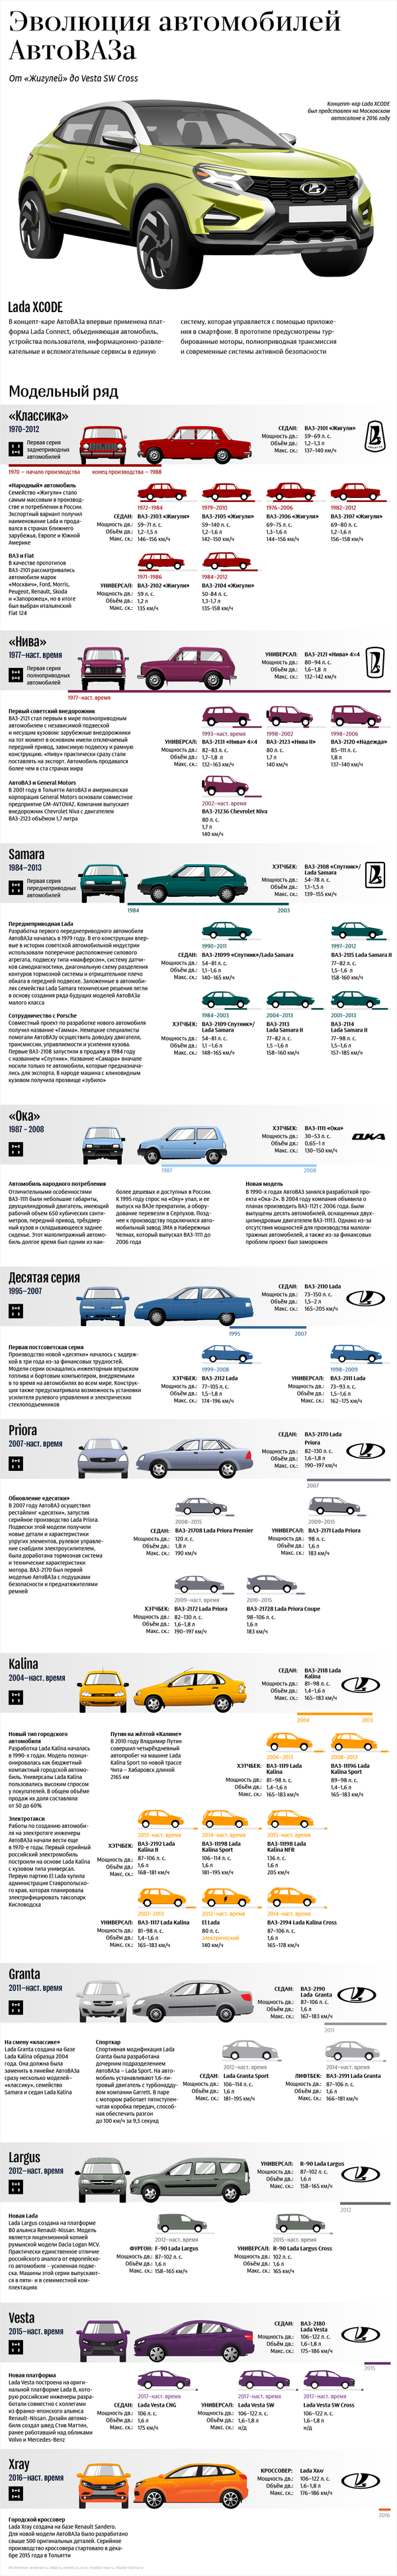 Эволюция автомобилей АвтоВАЗа – инфографика на sputnik.by - Sputnik Беларусь